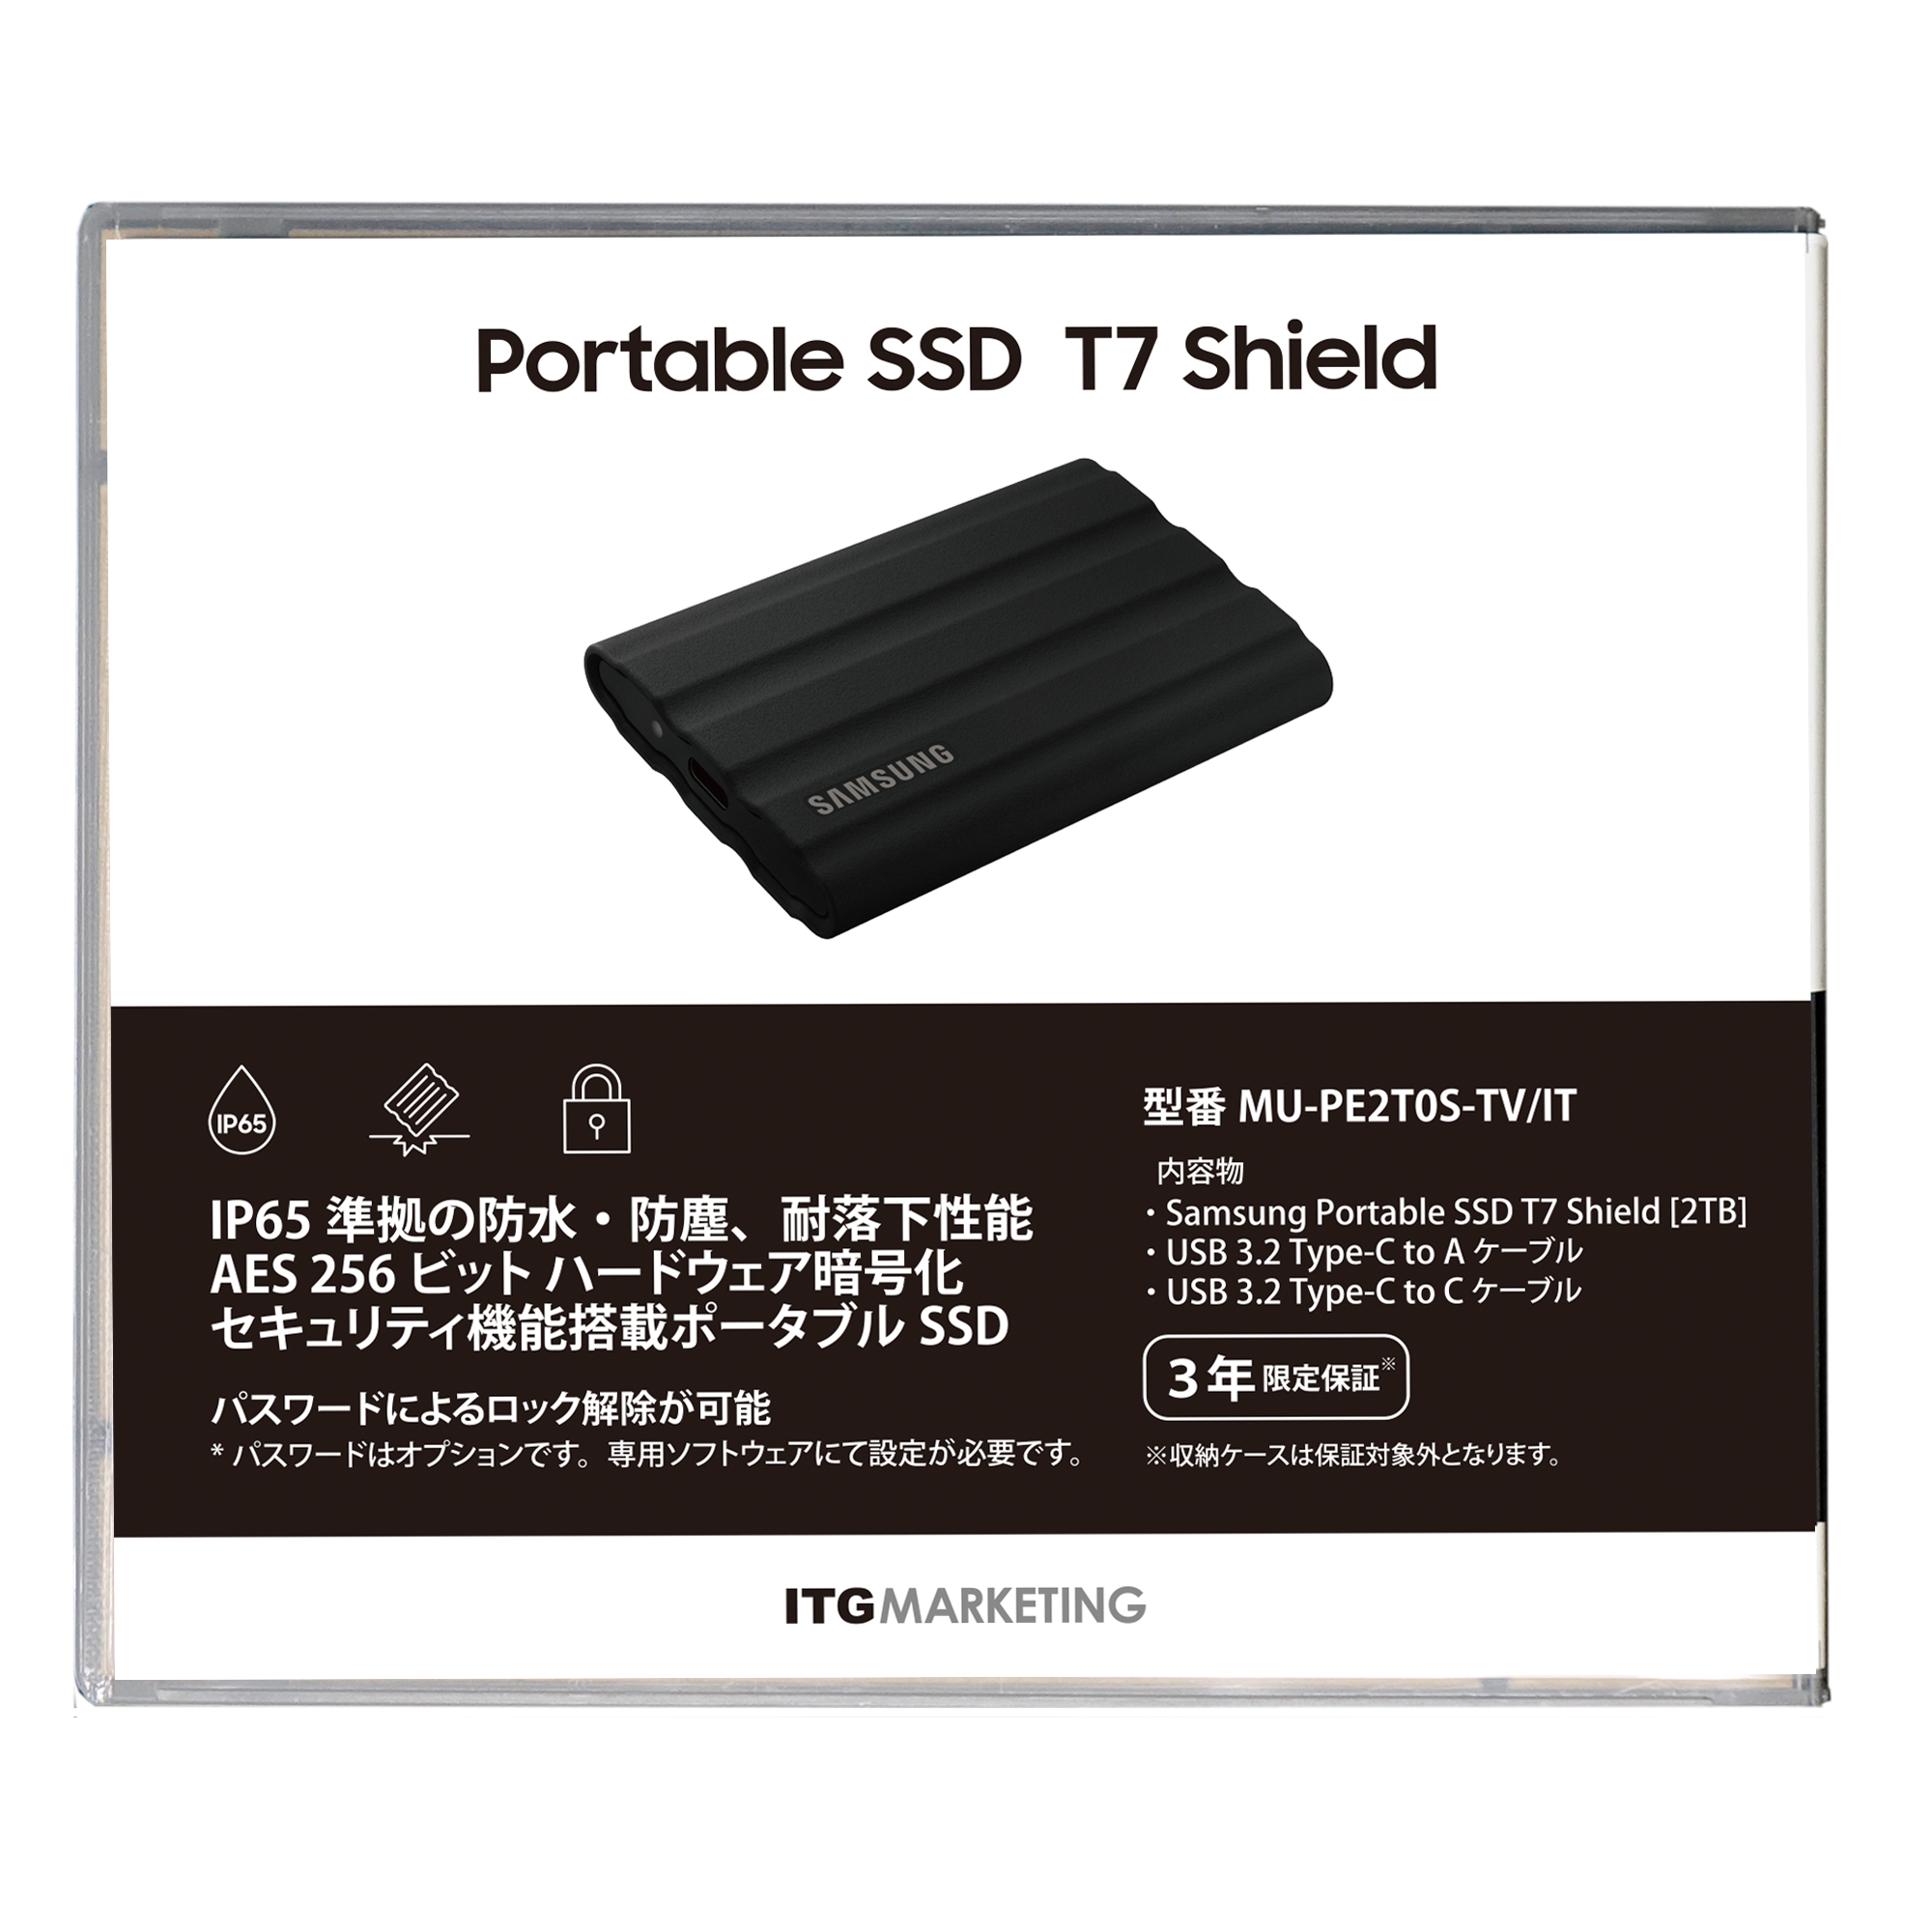 Portable SSD T7 Shield (2TB) 放送局向け専用ケース入りモデル